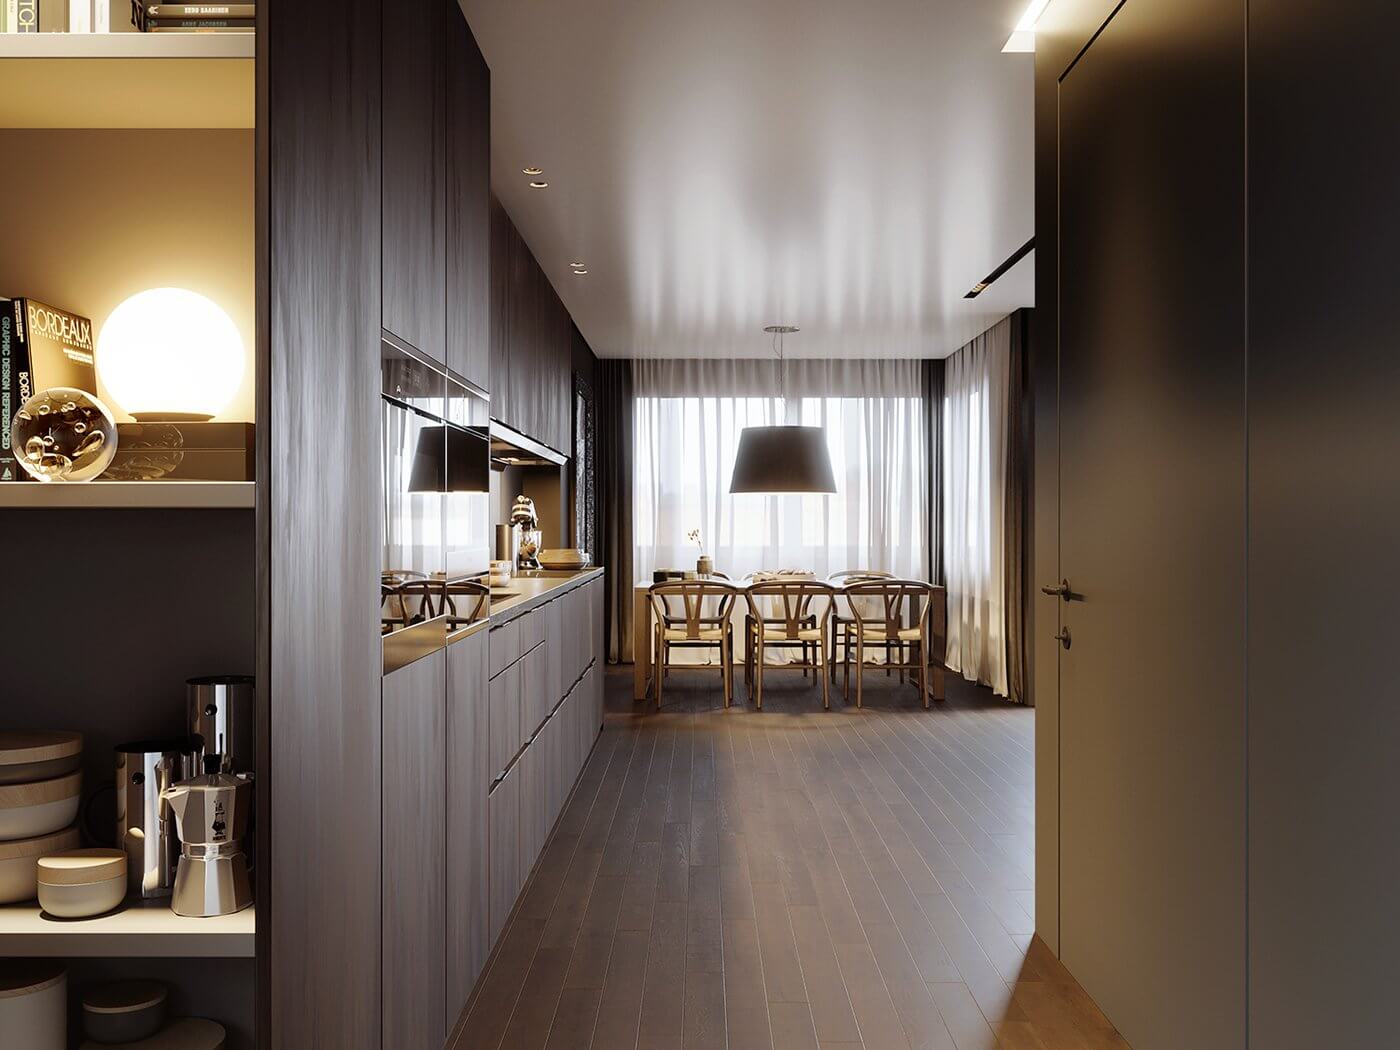 Apartment in munich corridor kitchen - cgi visualization